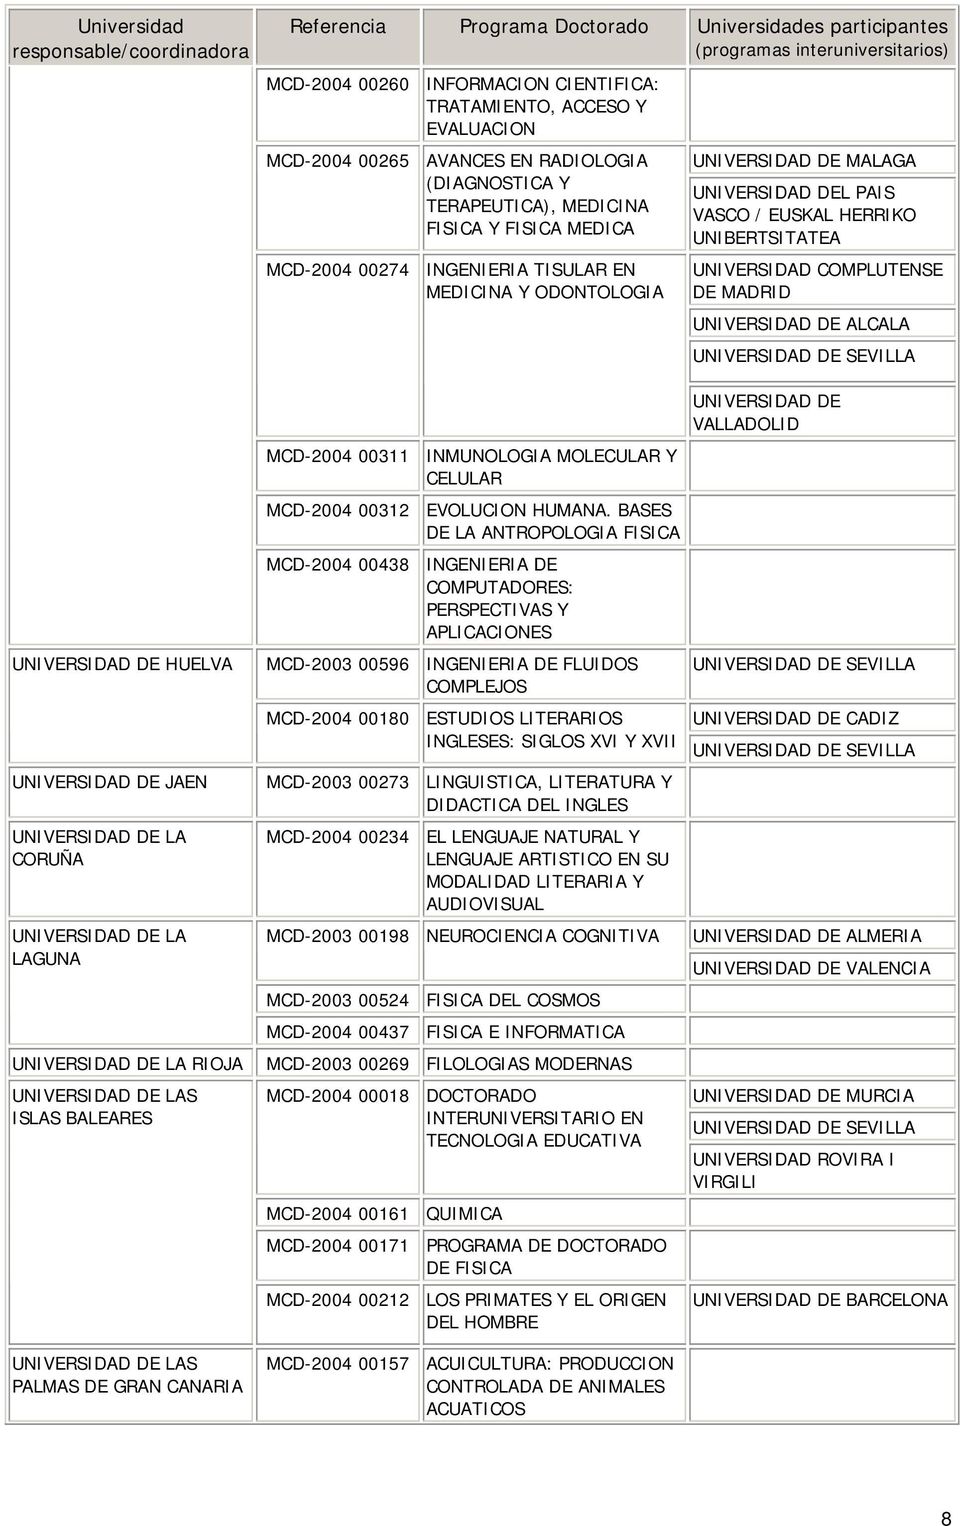 BASES DE LA ANTROPOLOGIA FISICA MCD-2004 00438 INGENIERIA DE COMPUTADORES: PERSPECTIVAS Y APLICACIONES MCD-2003 00596 INGENIERIA DE FLUIDOS COMPLEJOS MALAGA L PAIS VASCO / EUSKAL HERRIKO